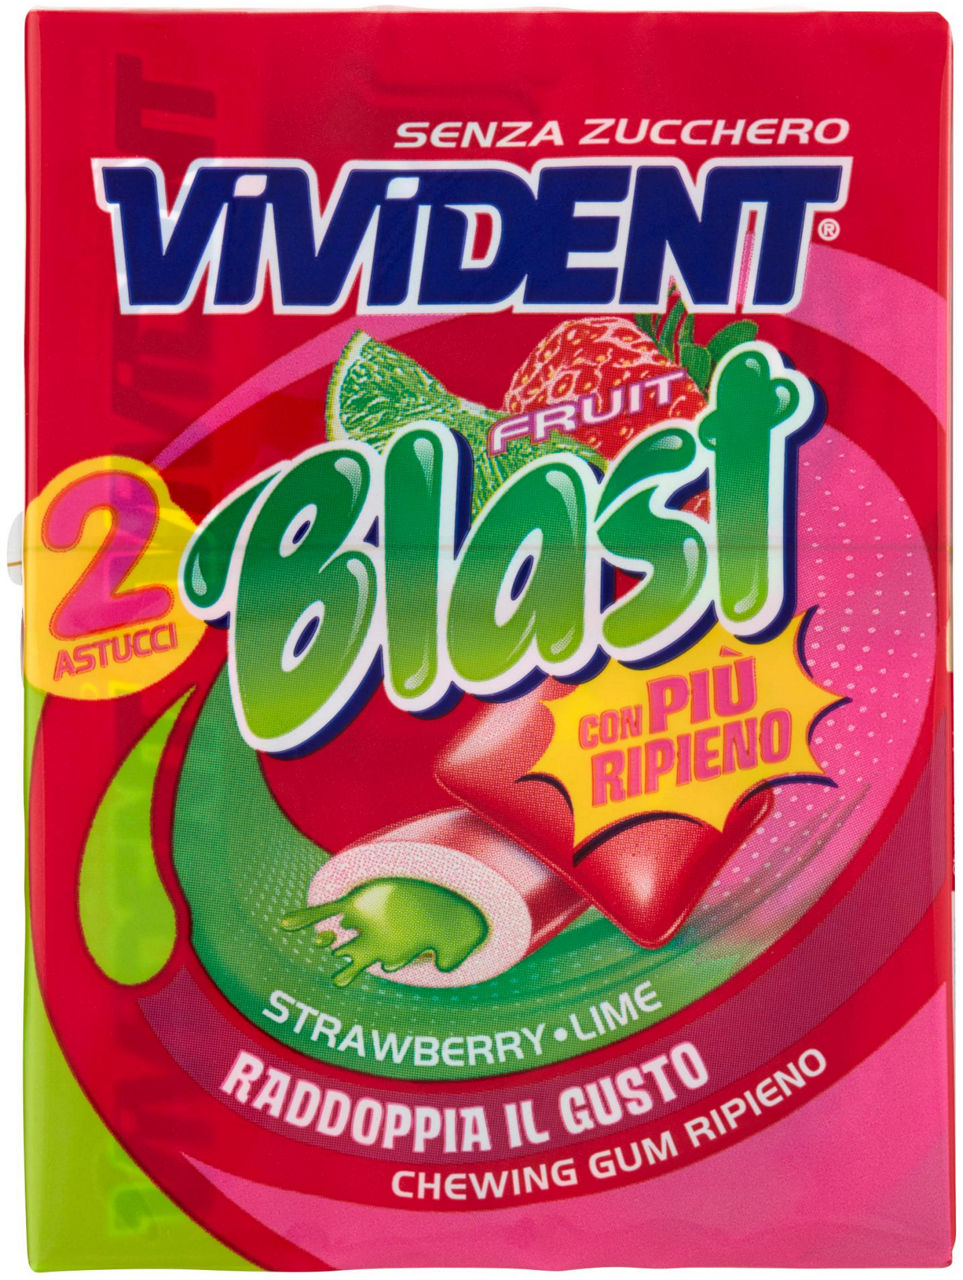 Chewing gum vivident blast frutti astuccio pz. 2 g. 60